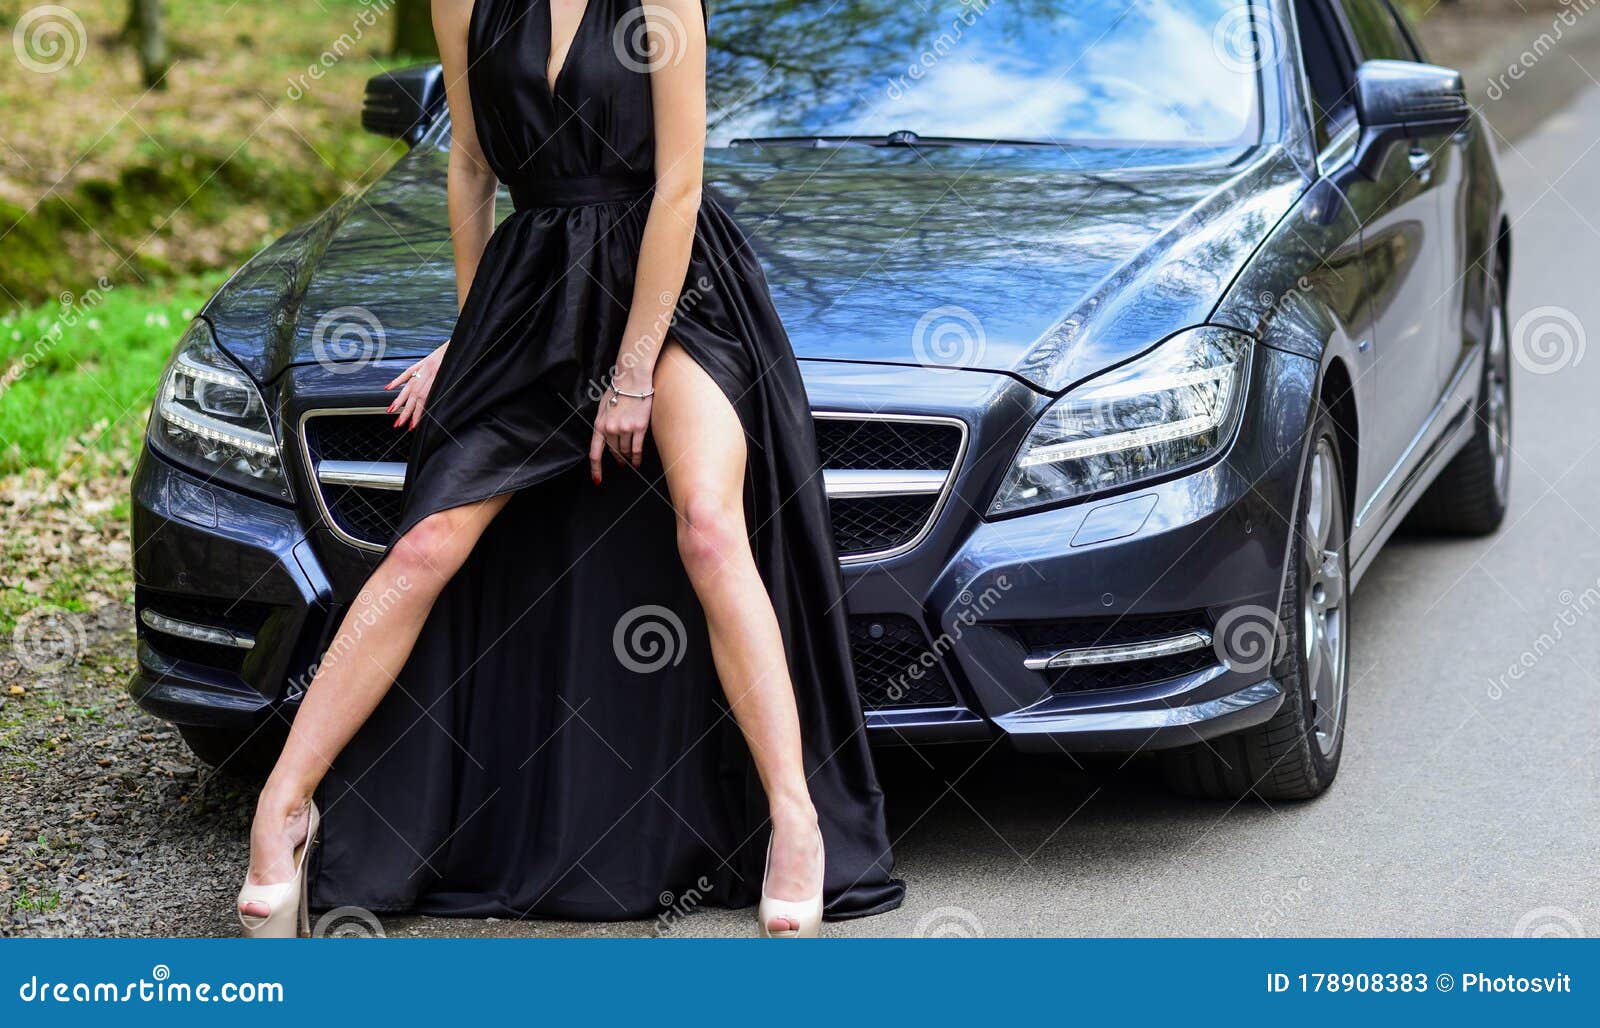 Provocative Concept. Luxury Car. Escort and Sexual Services. Seductive Pose